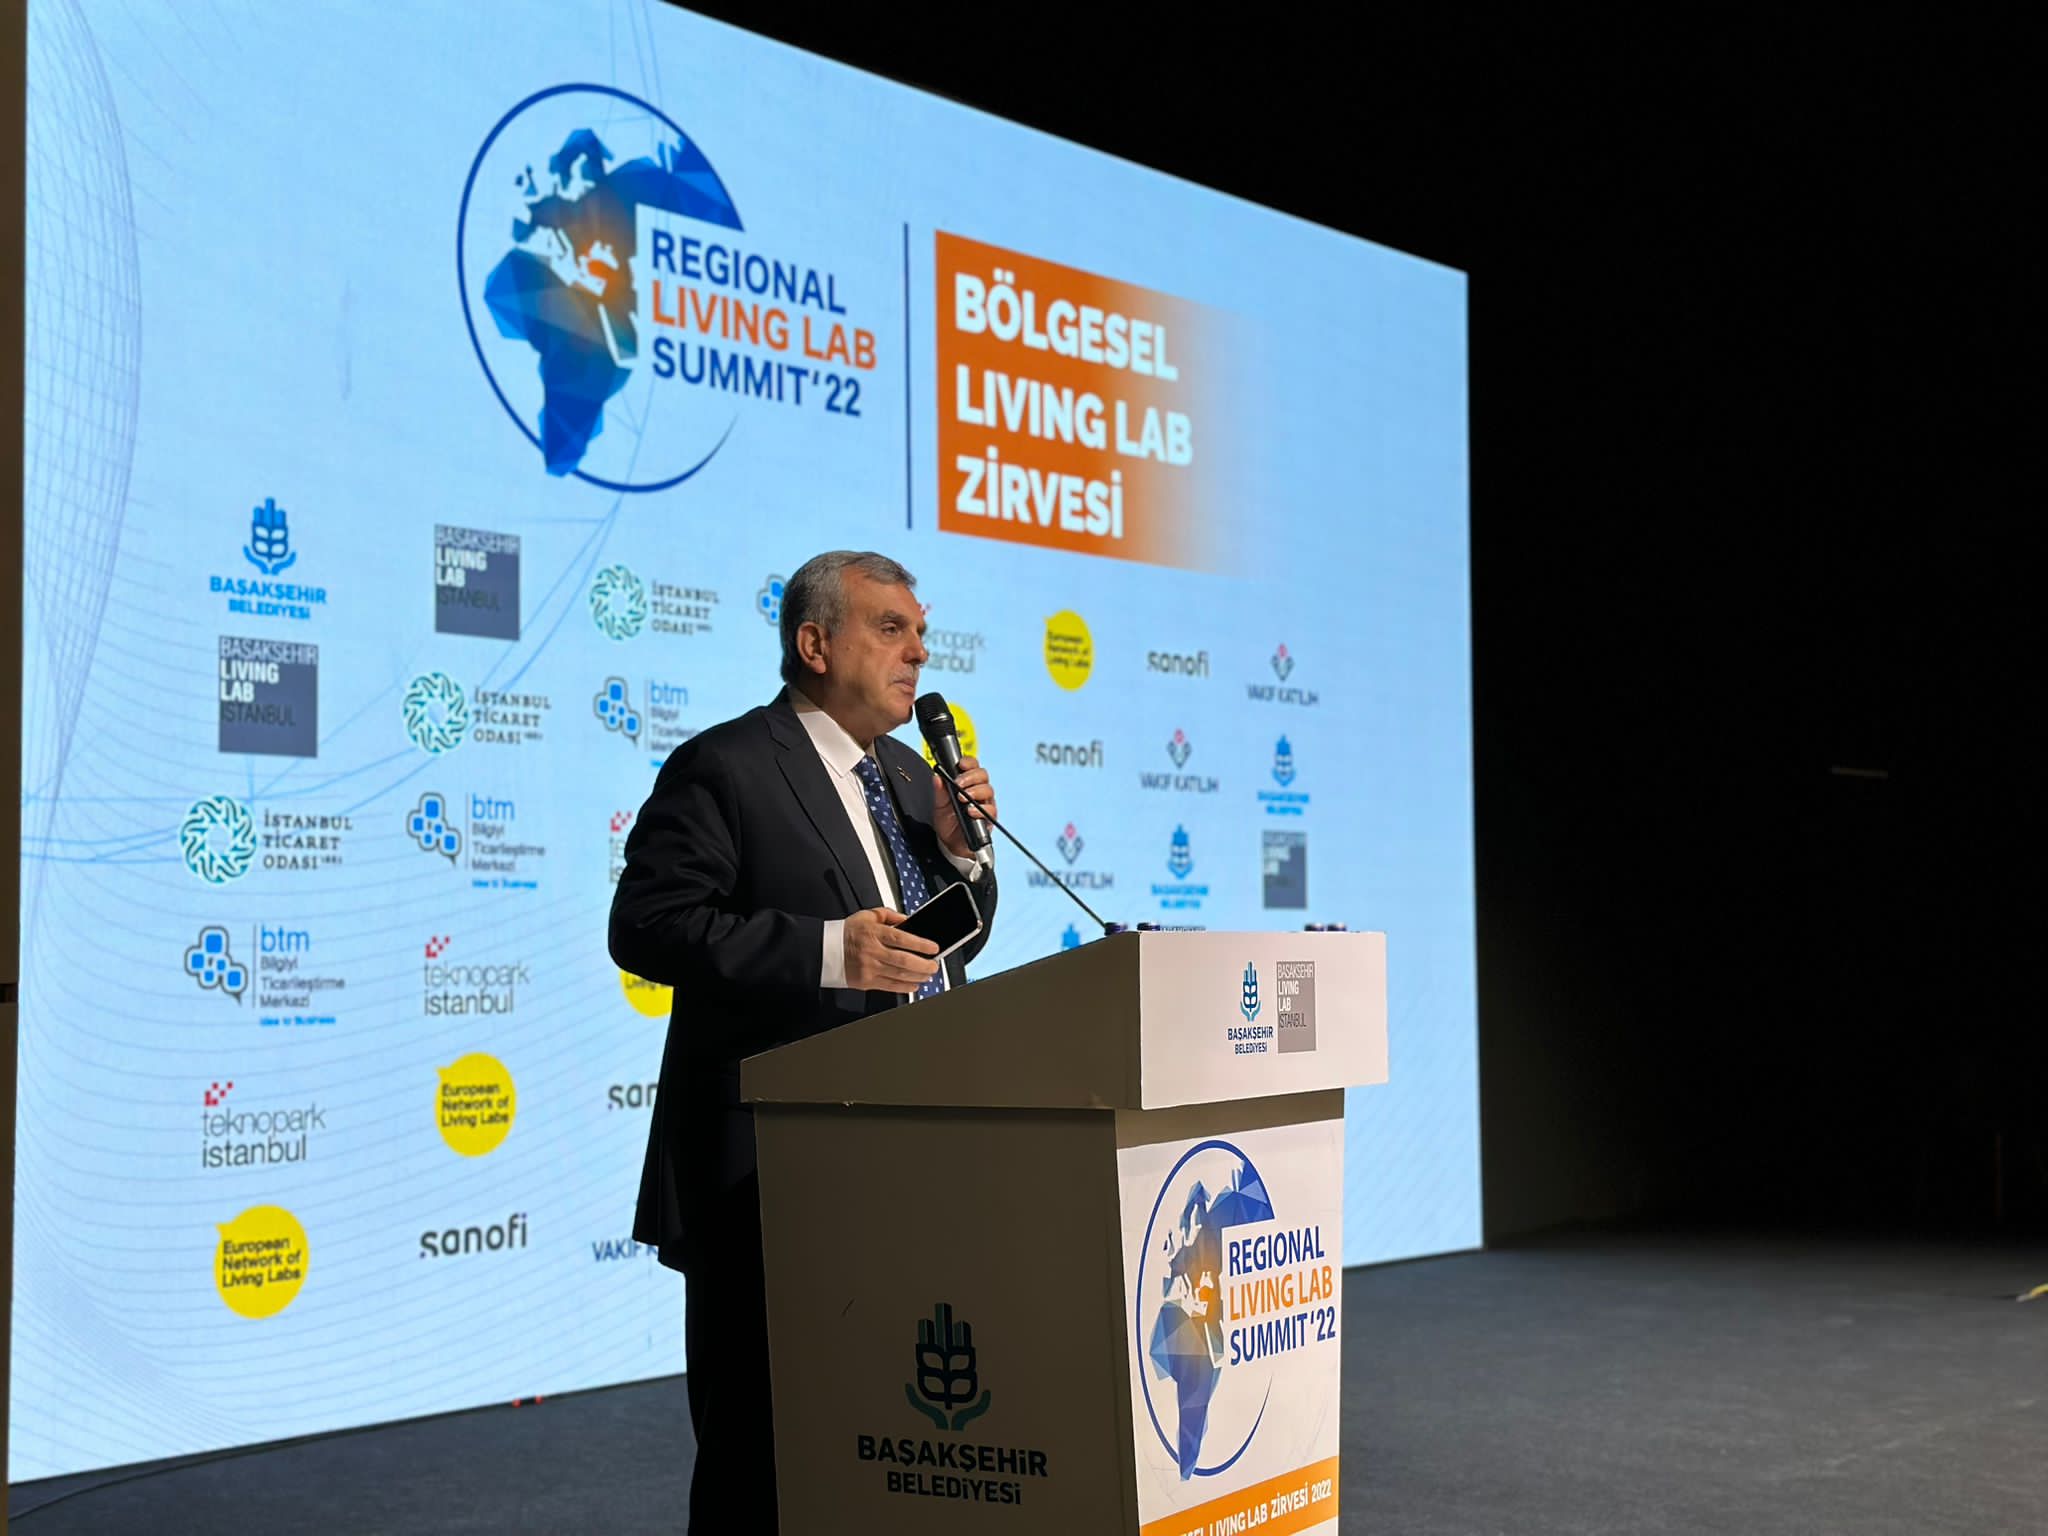 Regional Living Lab Summit 2022/ Istanbul 📃